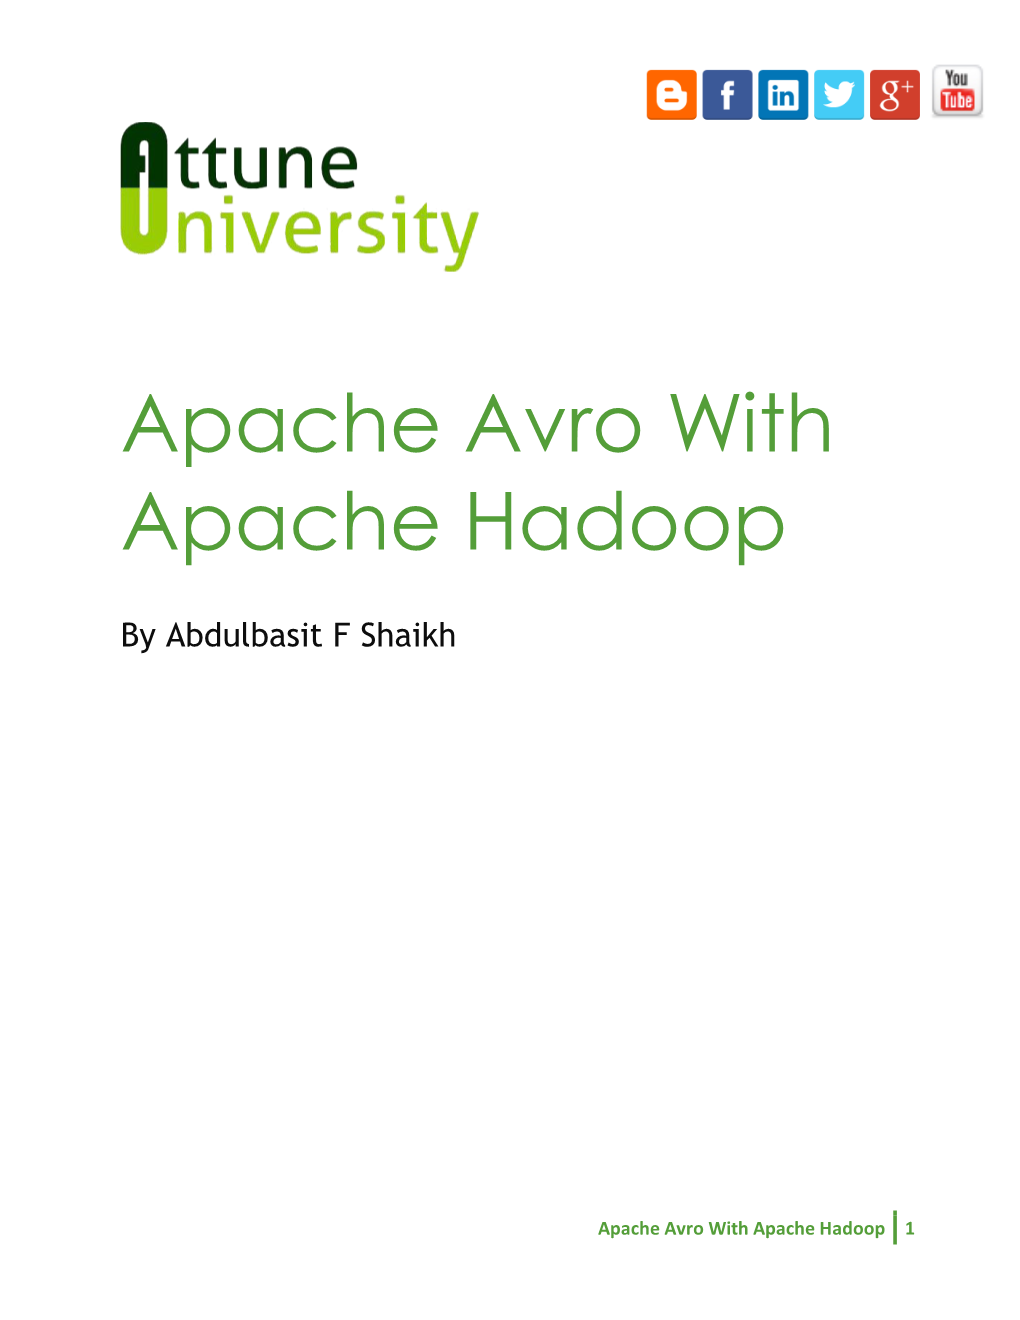 Apache Avro with Apache Hadoop